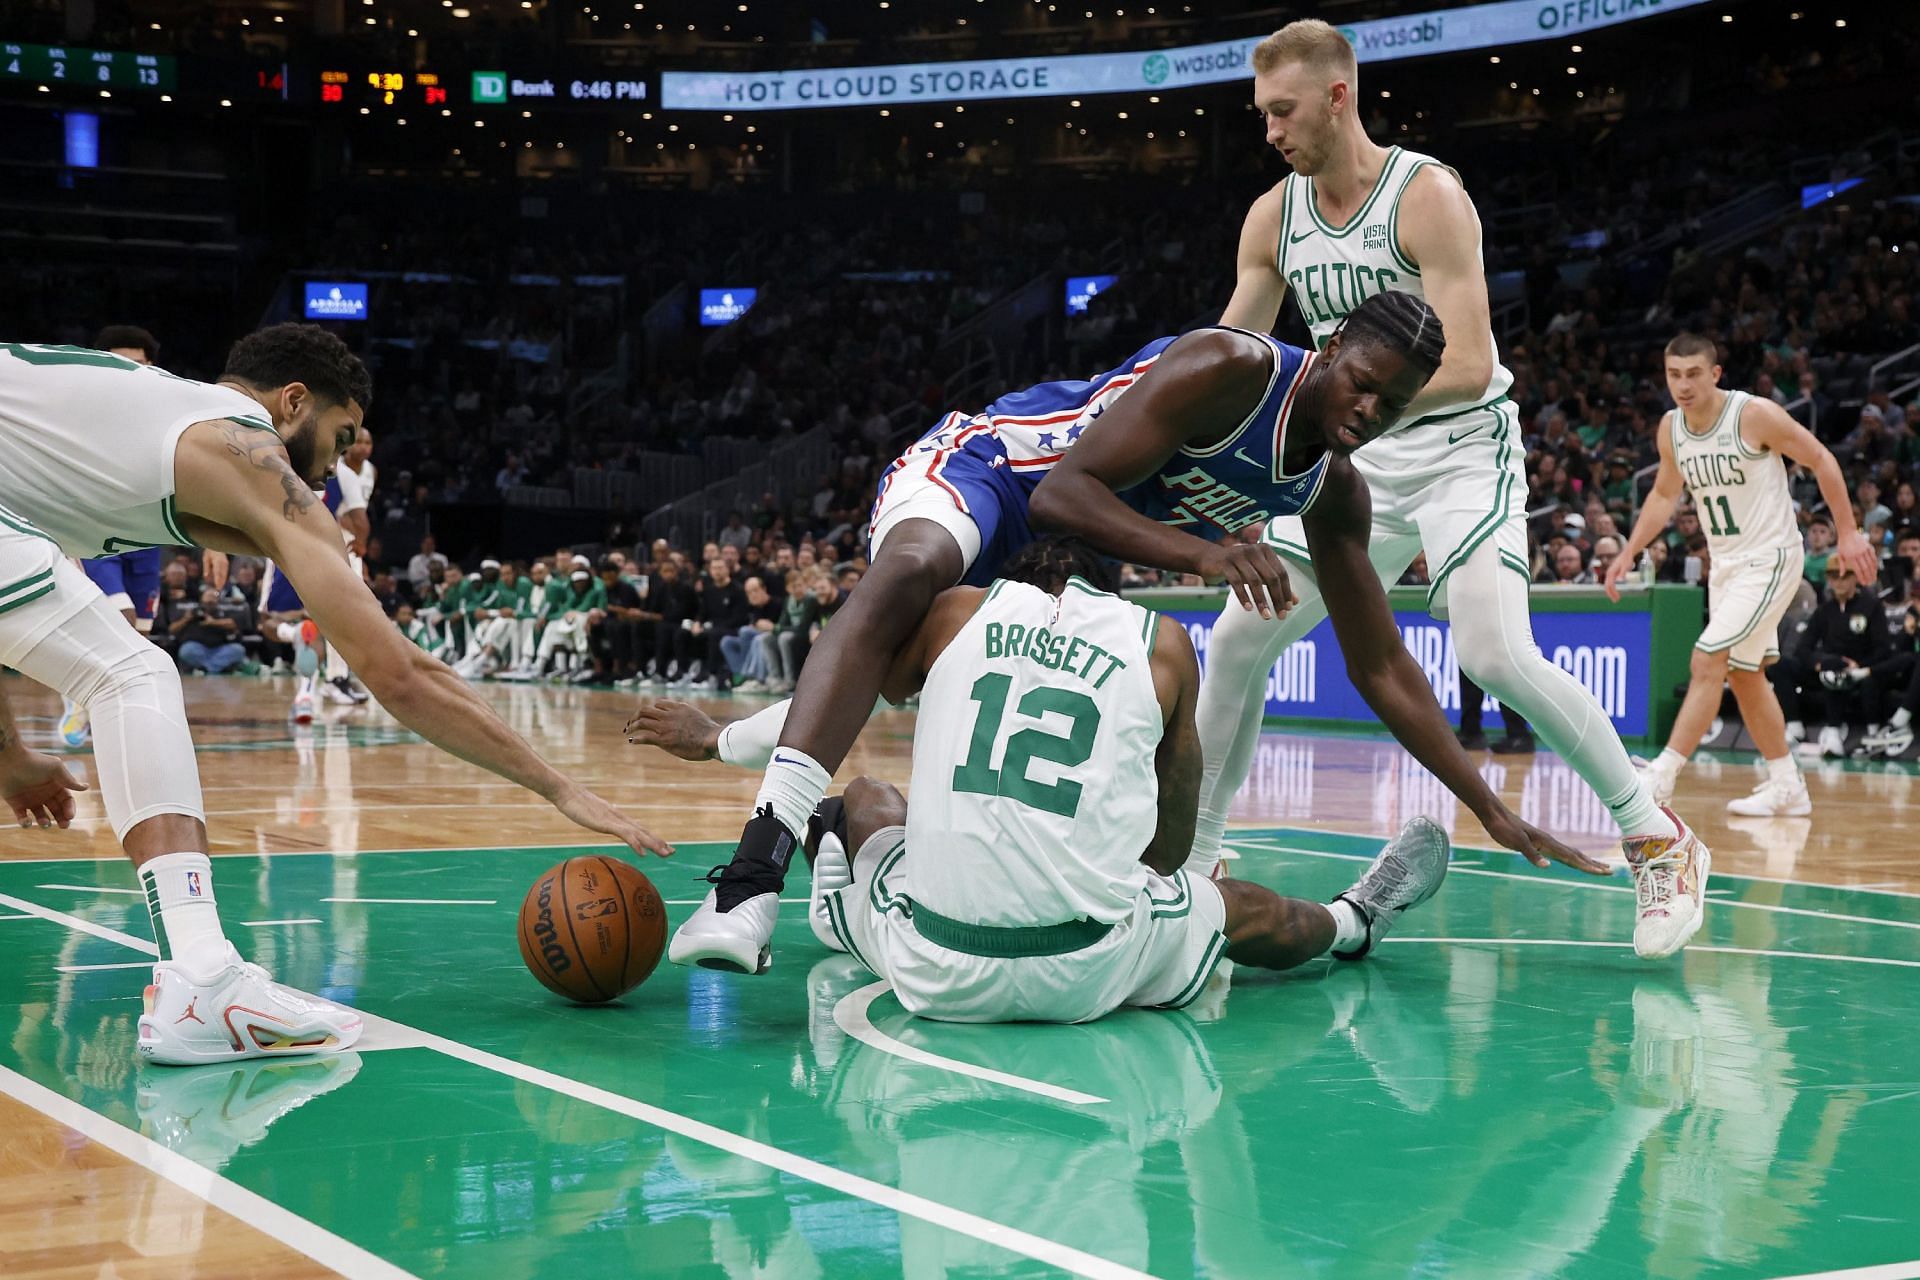 He got no more hoes callin': Mo Bamba's open dunk miss invites NBA